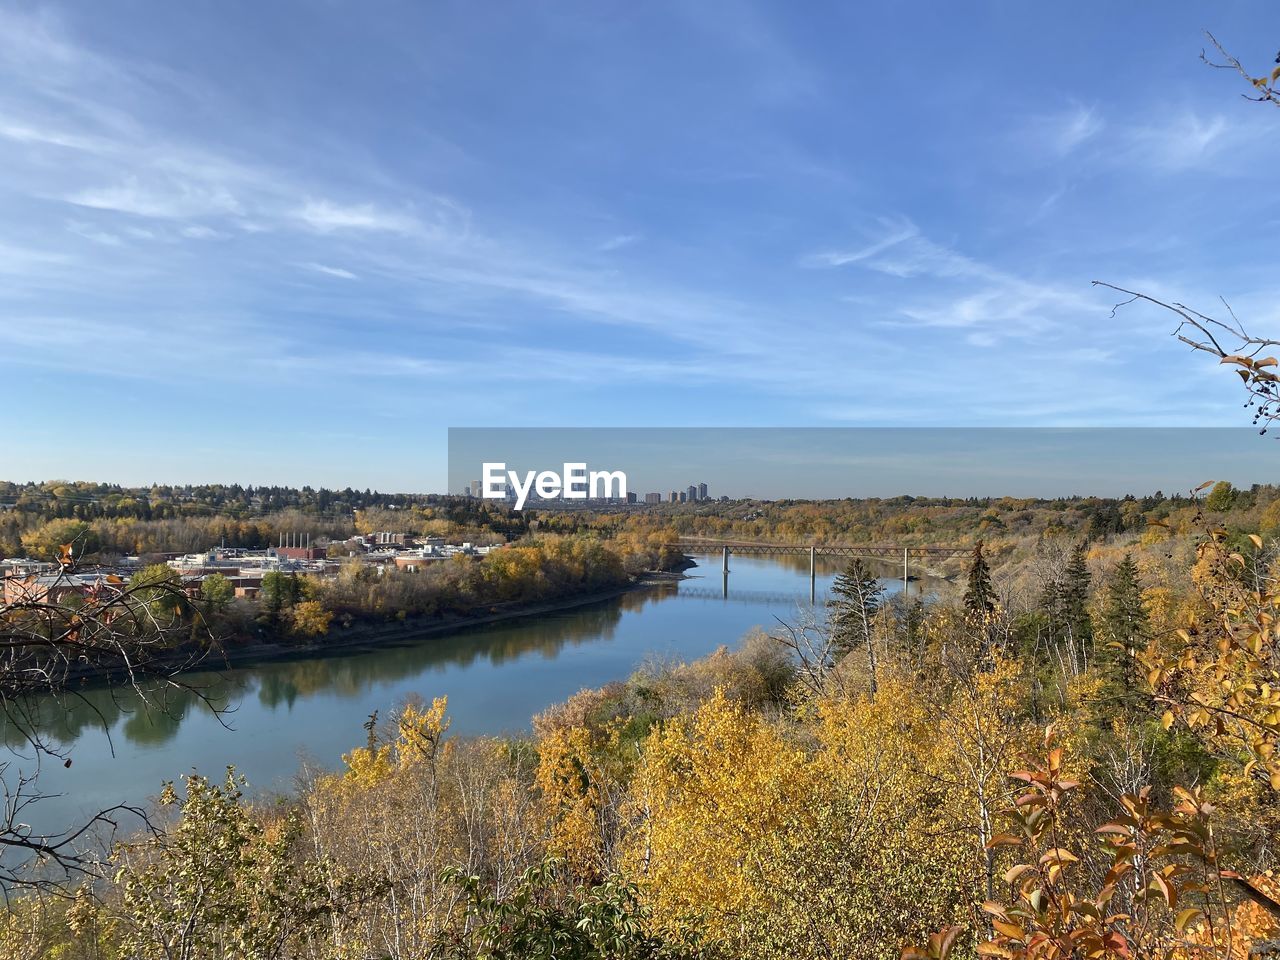 Edmonton river valley views